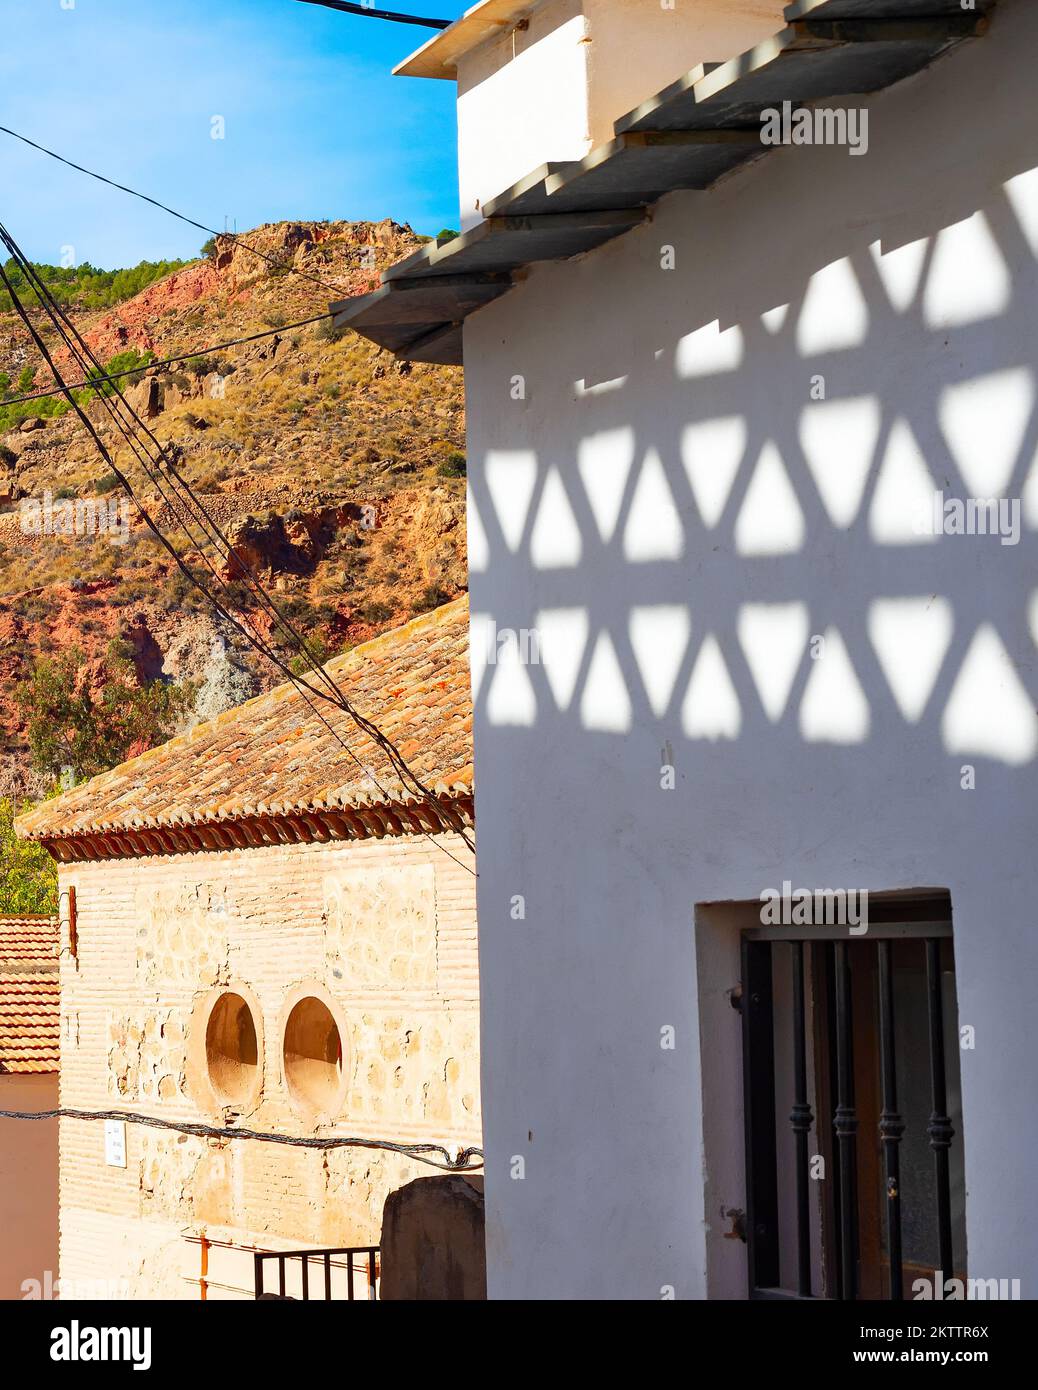 Street of an old mountain village in sunshine, shadows on wall, Cartagena, Spain Stock Photo